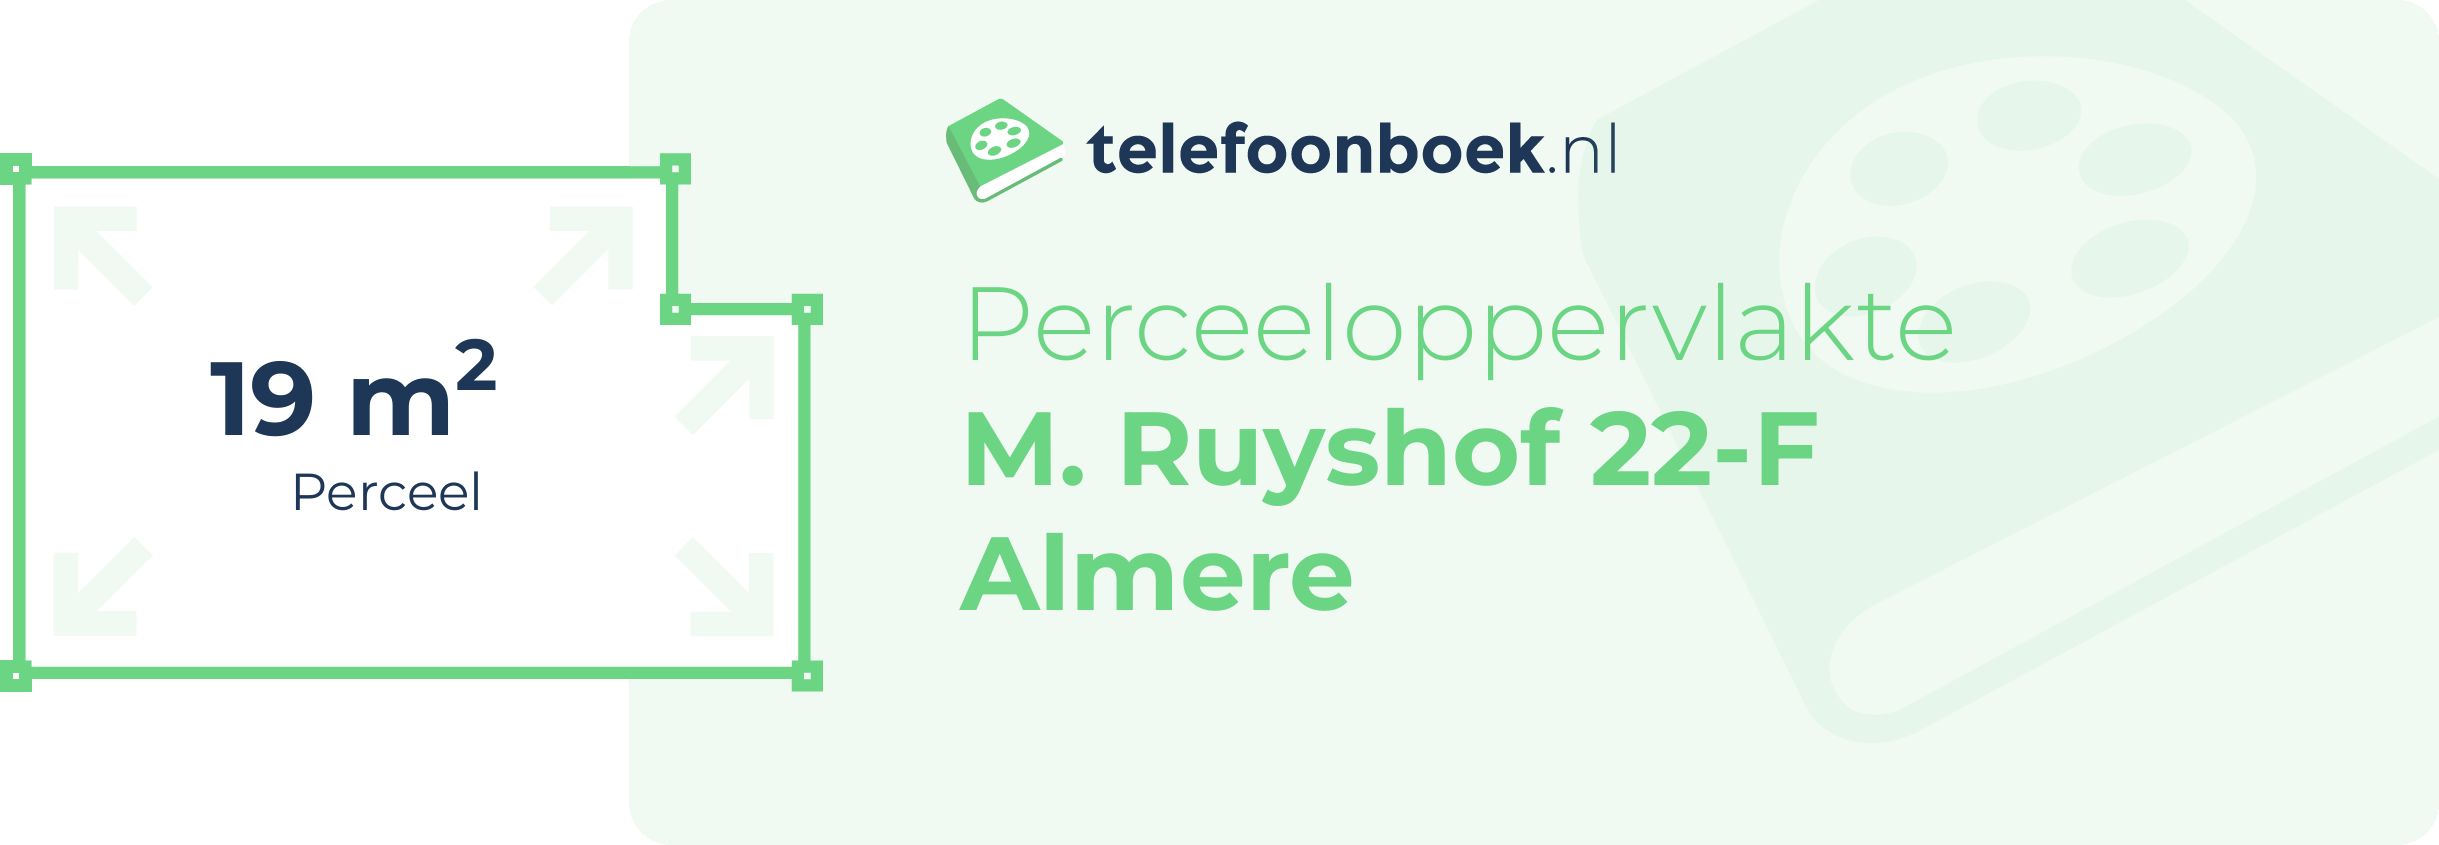 Perceeloppervlakte M. Ruyshof 22-F Almere